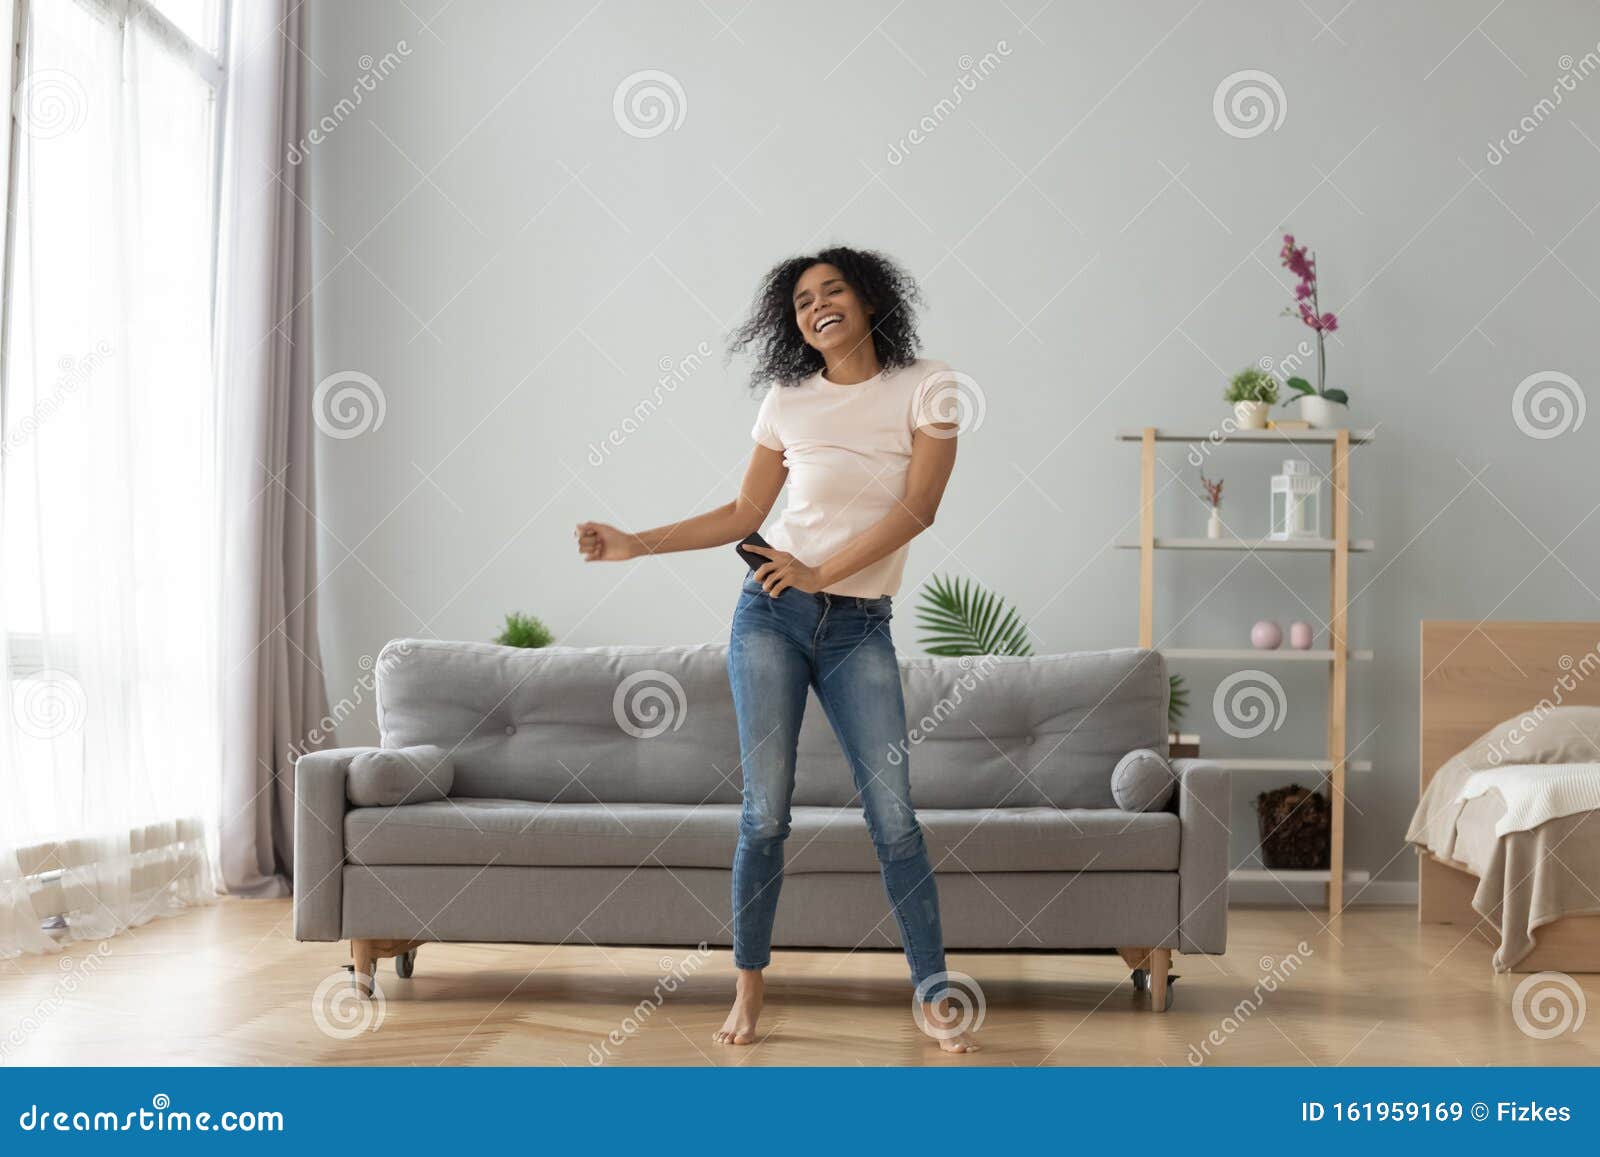 overjoyed black woman have fun dancing at home